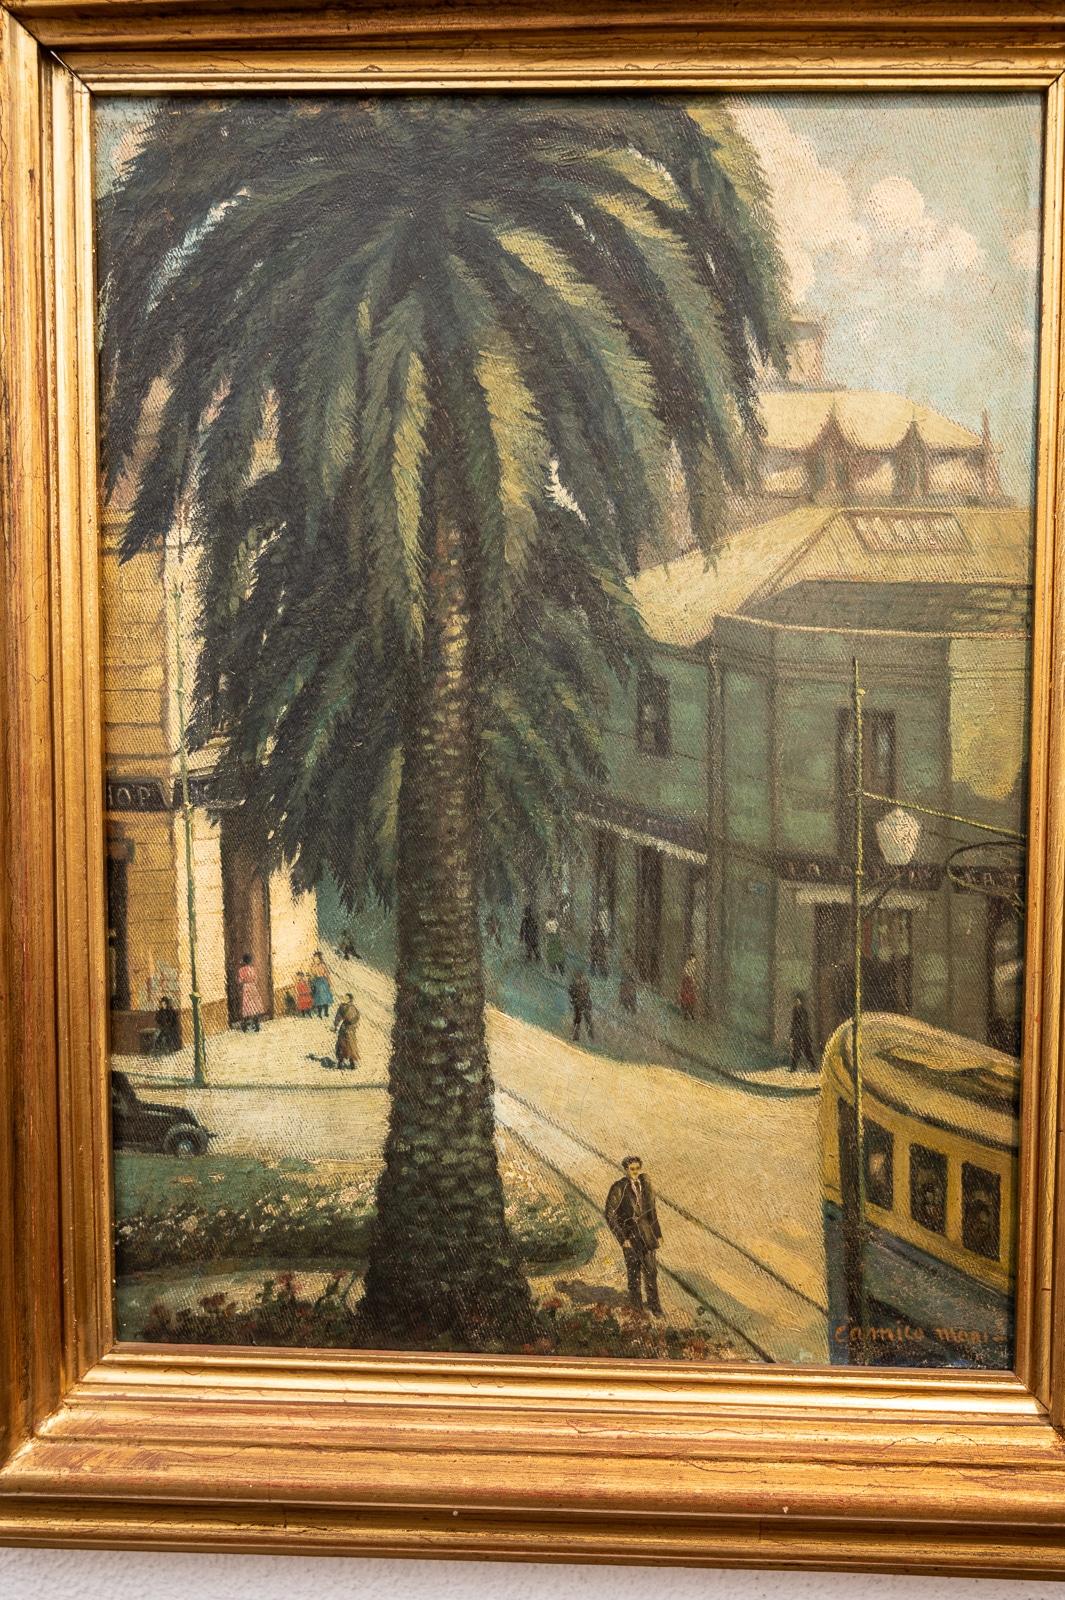 Street Scene with Palm Tree by Camillo Mori circa 1925 1